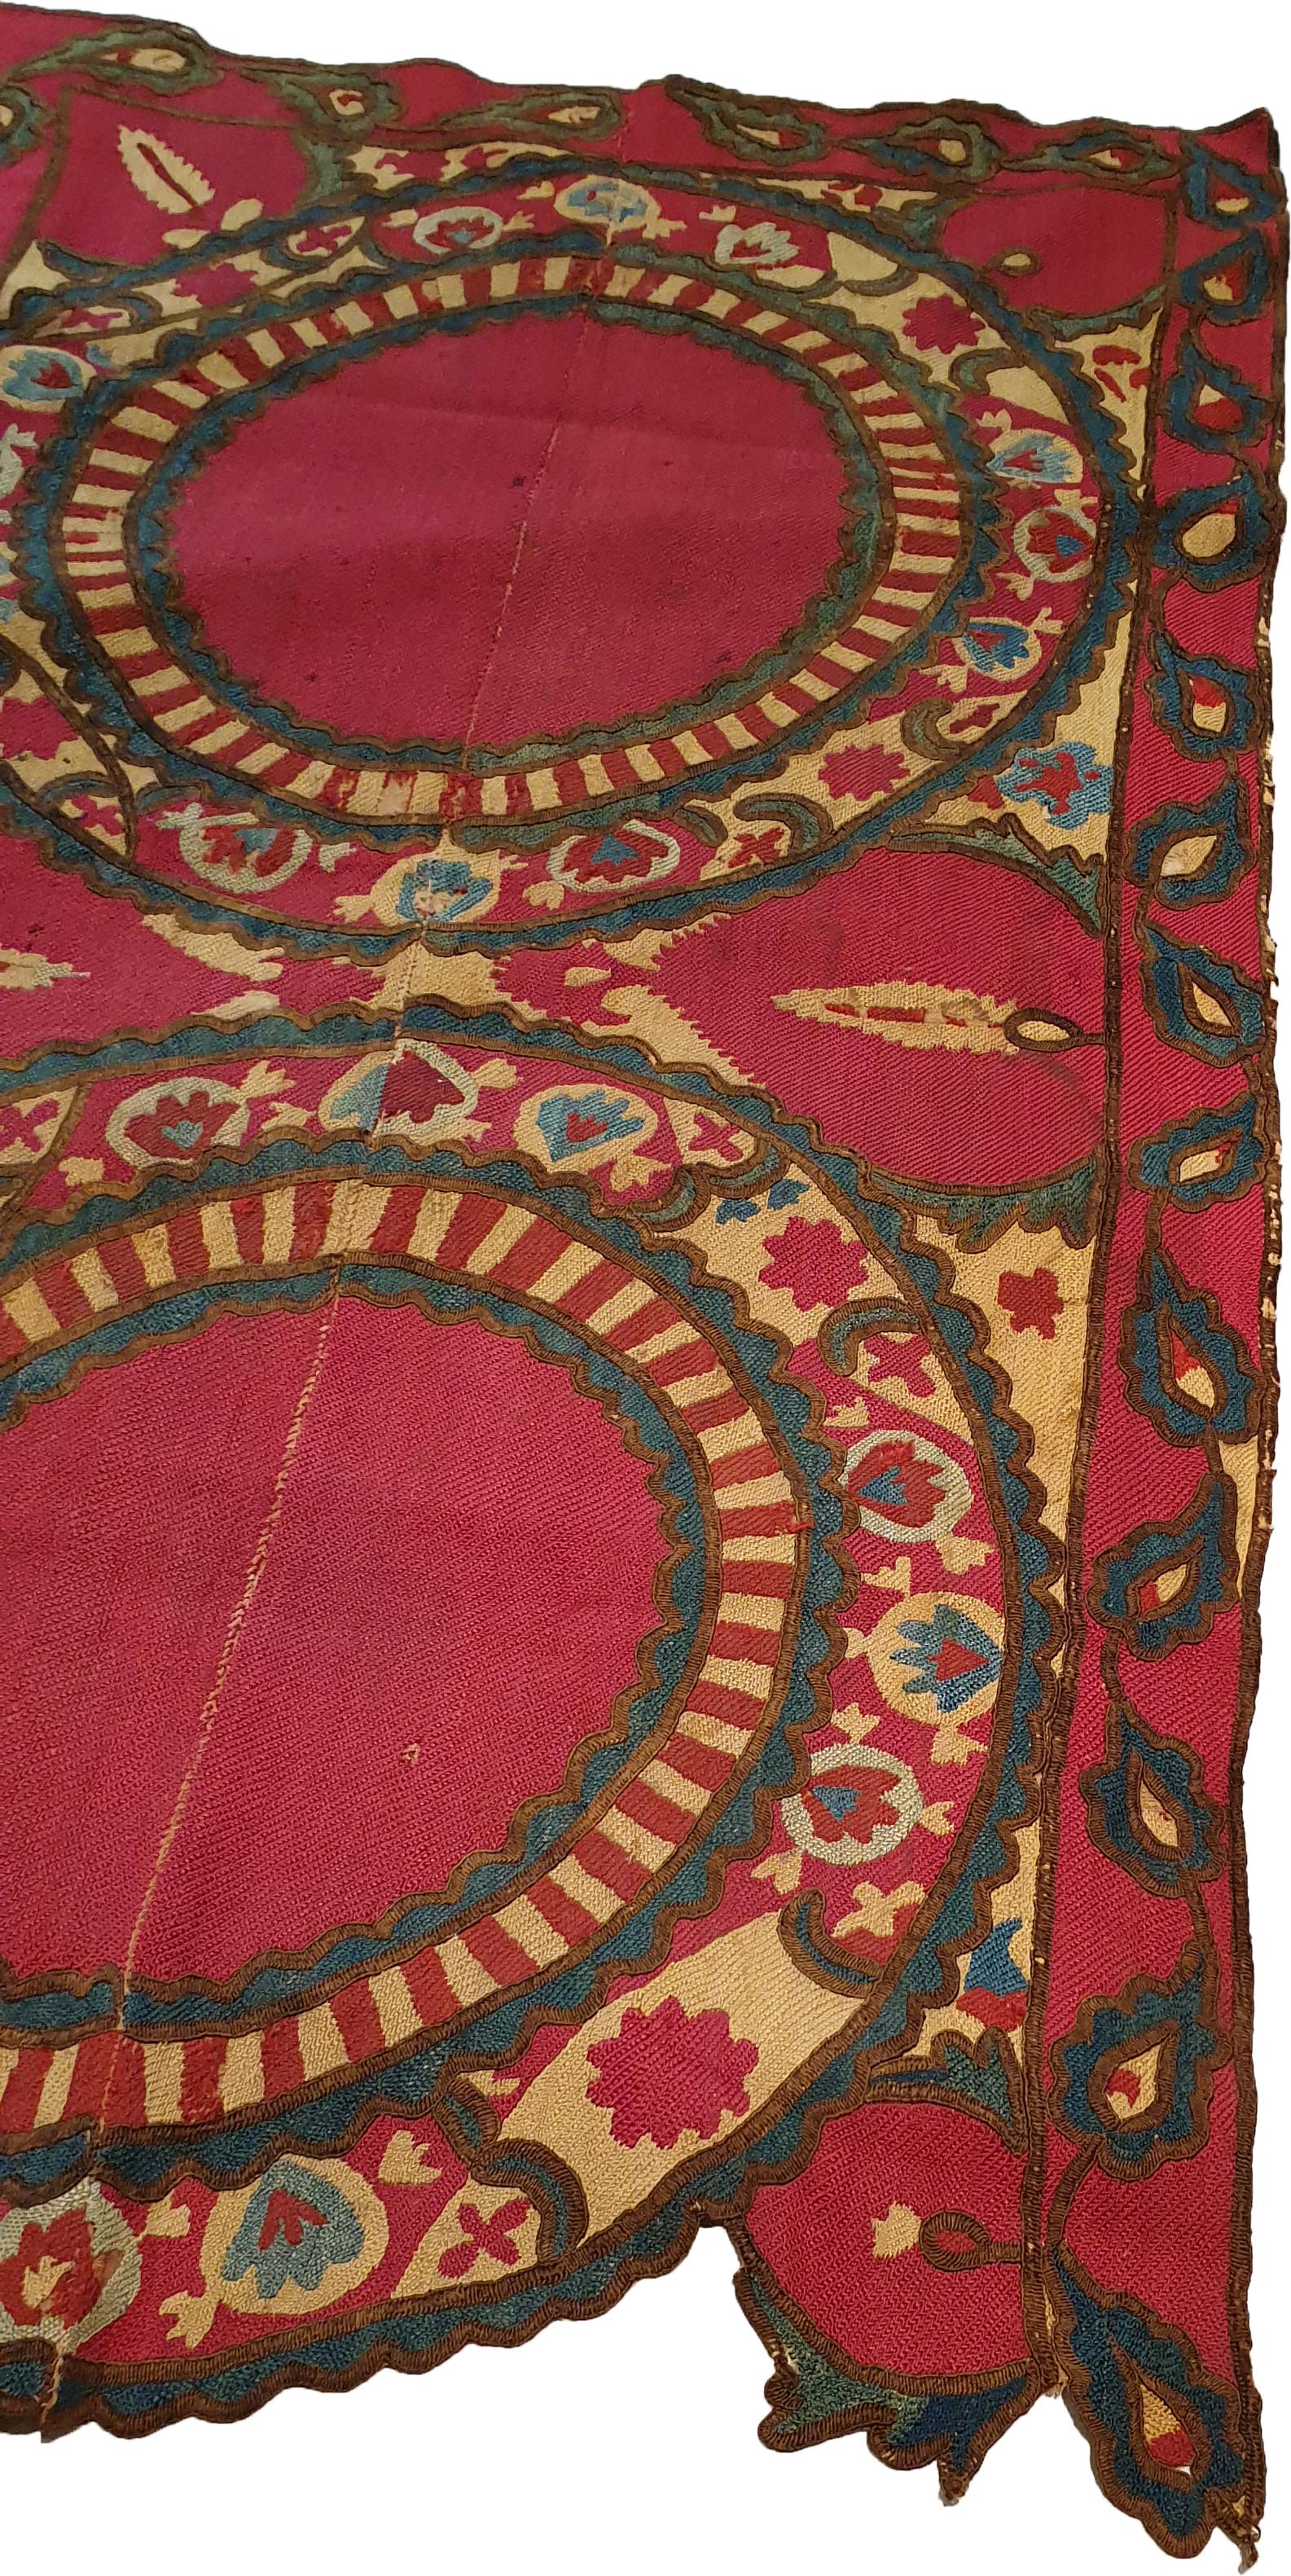 719 - 19th century textile Uzbekistan 'Tashkent'.